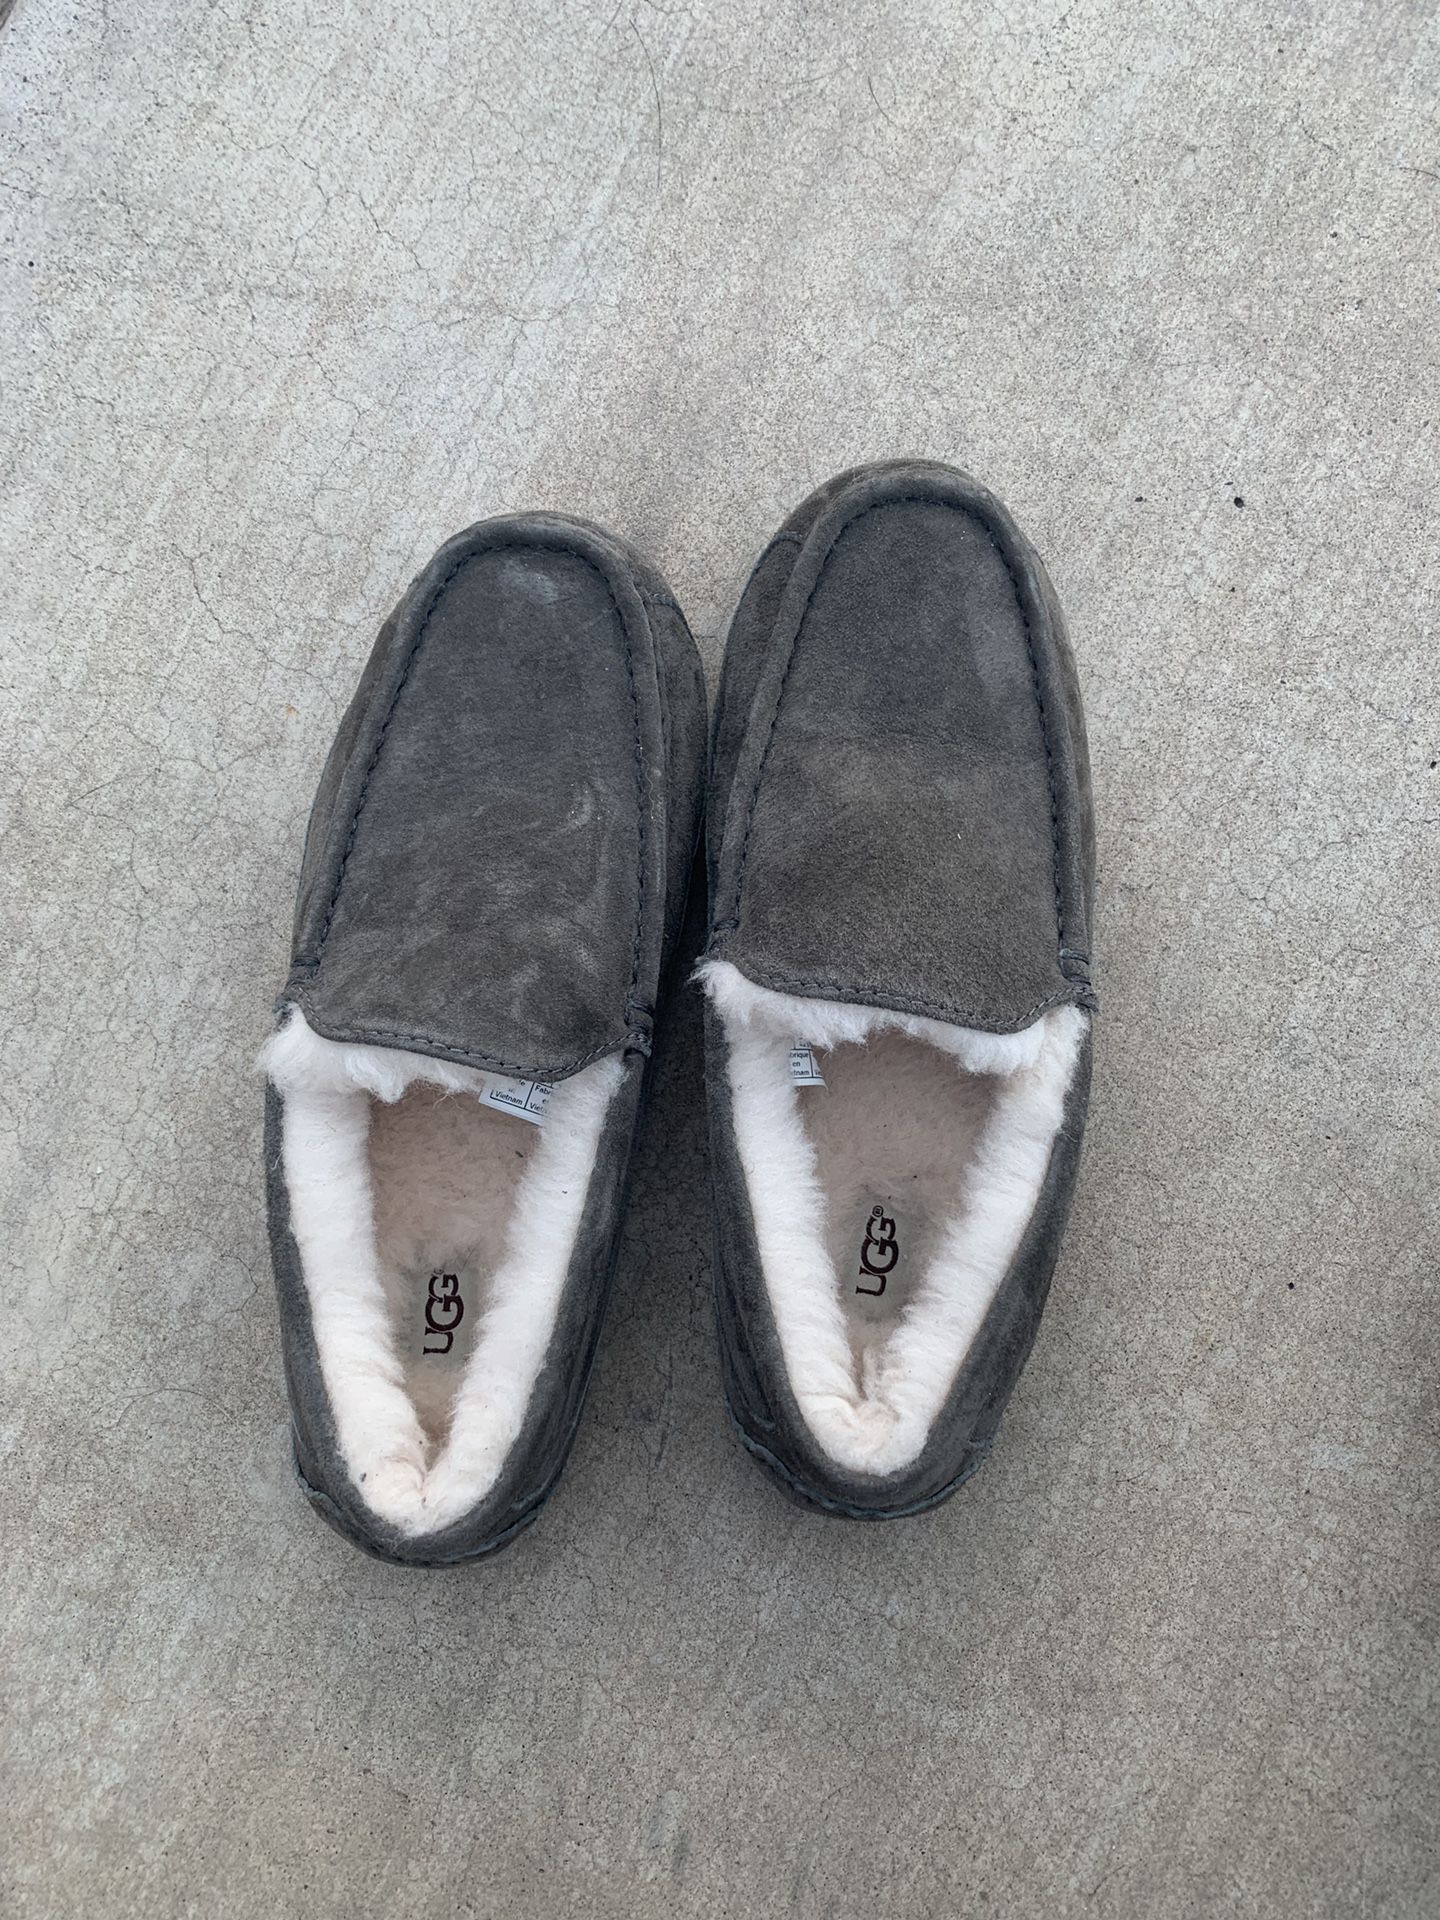 NEW Ugg men’s size 8 slipper moccasin shoe